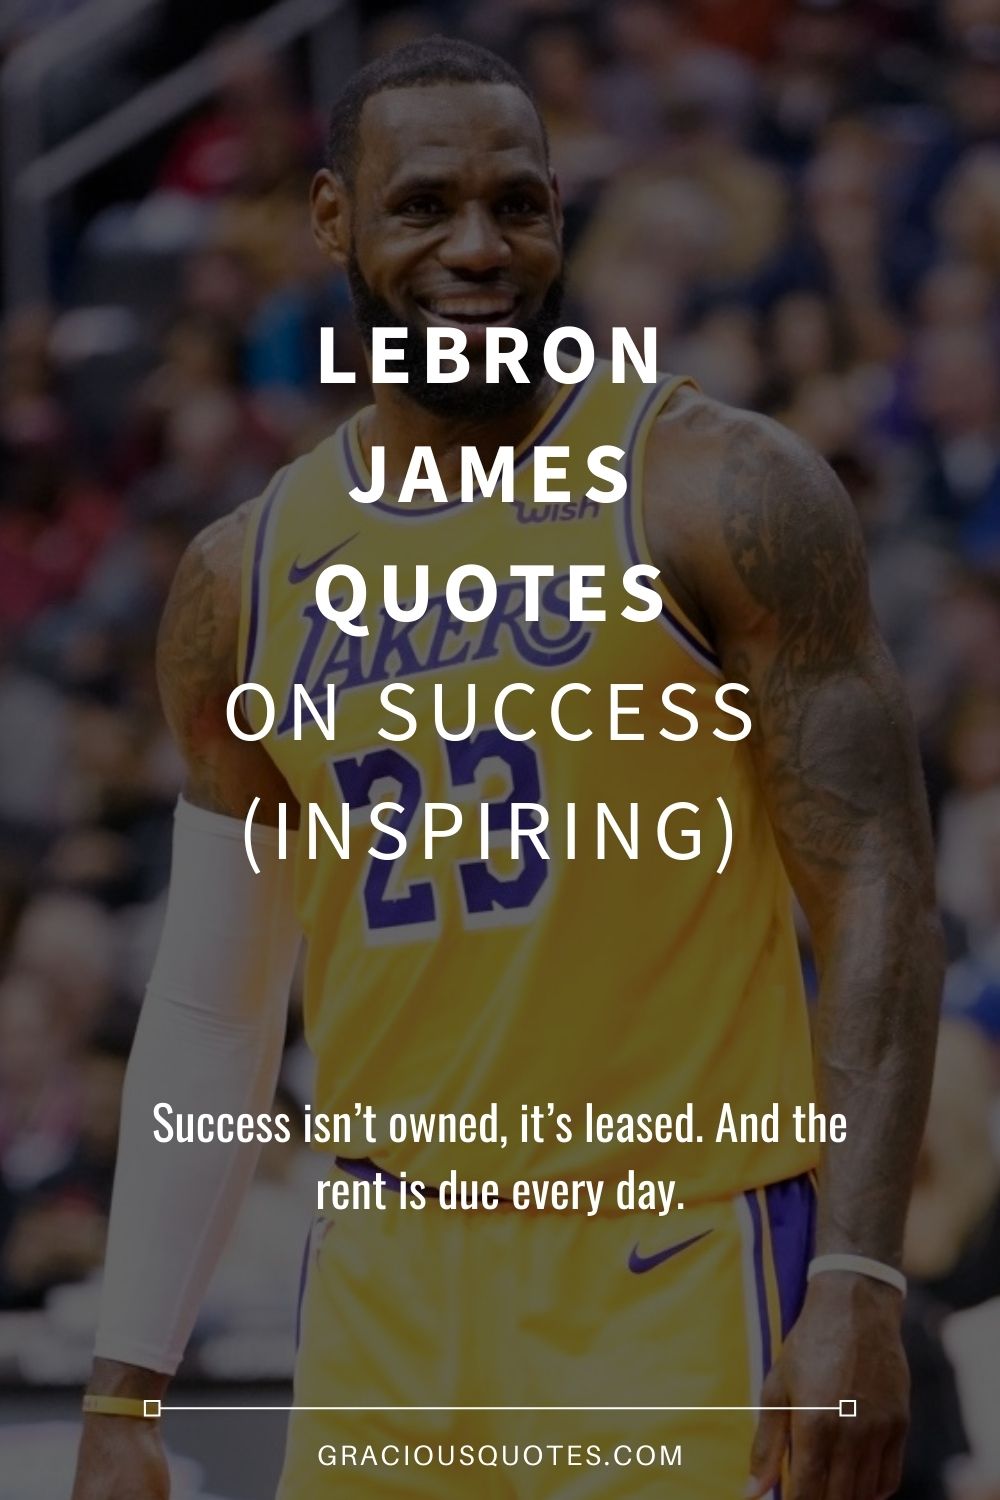 LeBron James Quotes on Success (INSPIRING) - Gracious Quotes